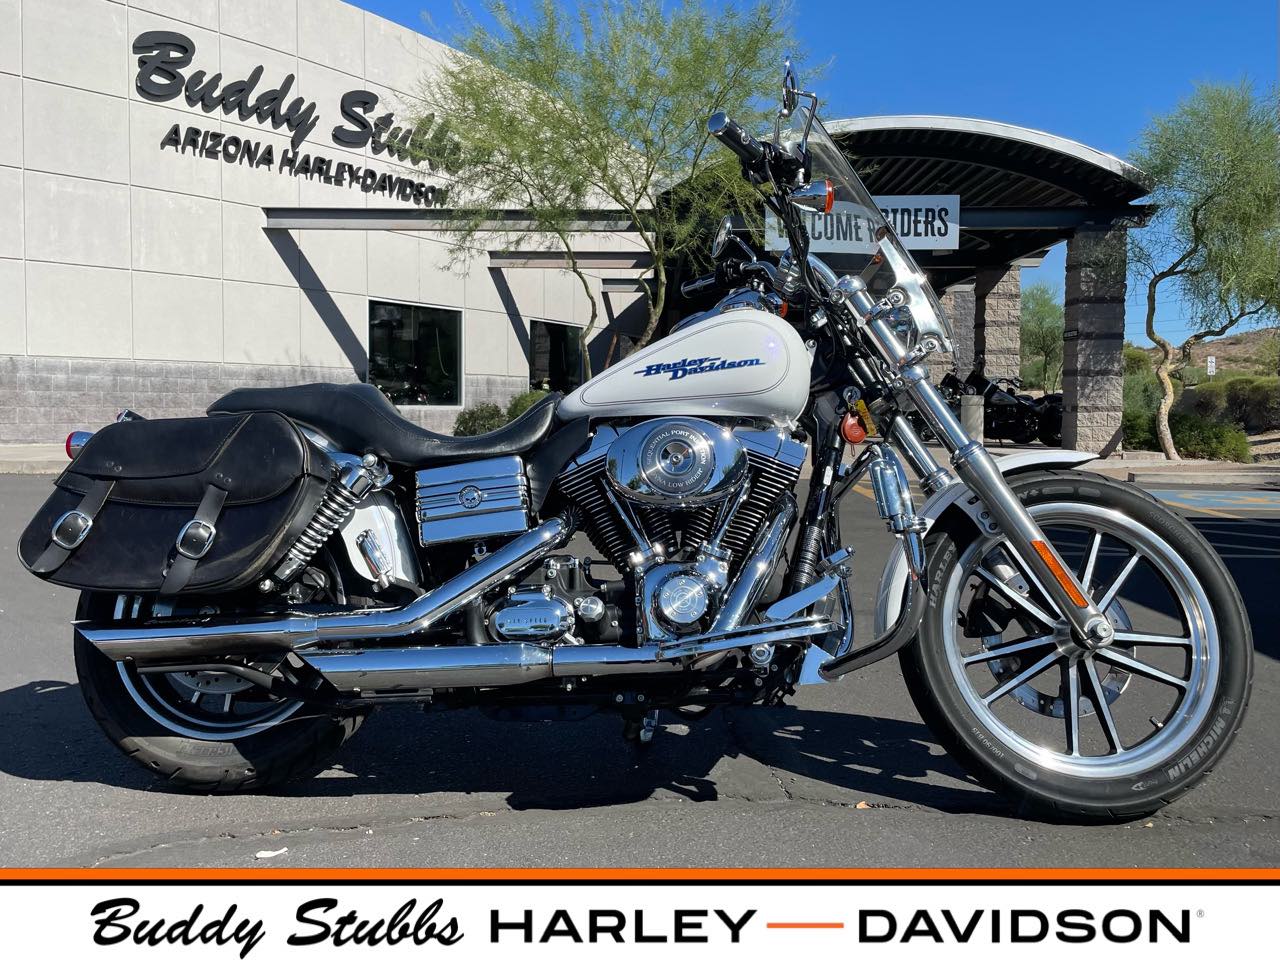 2006 Harley-Davidson Dyna Glide Low Rider at Buddy Stubbs Arizona Harley-Davidson